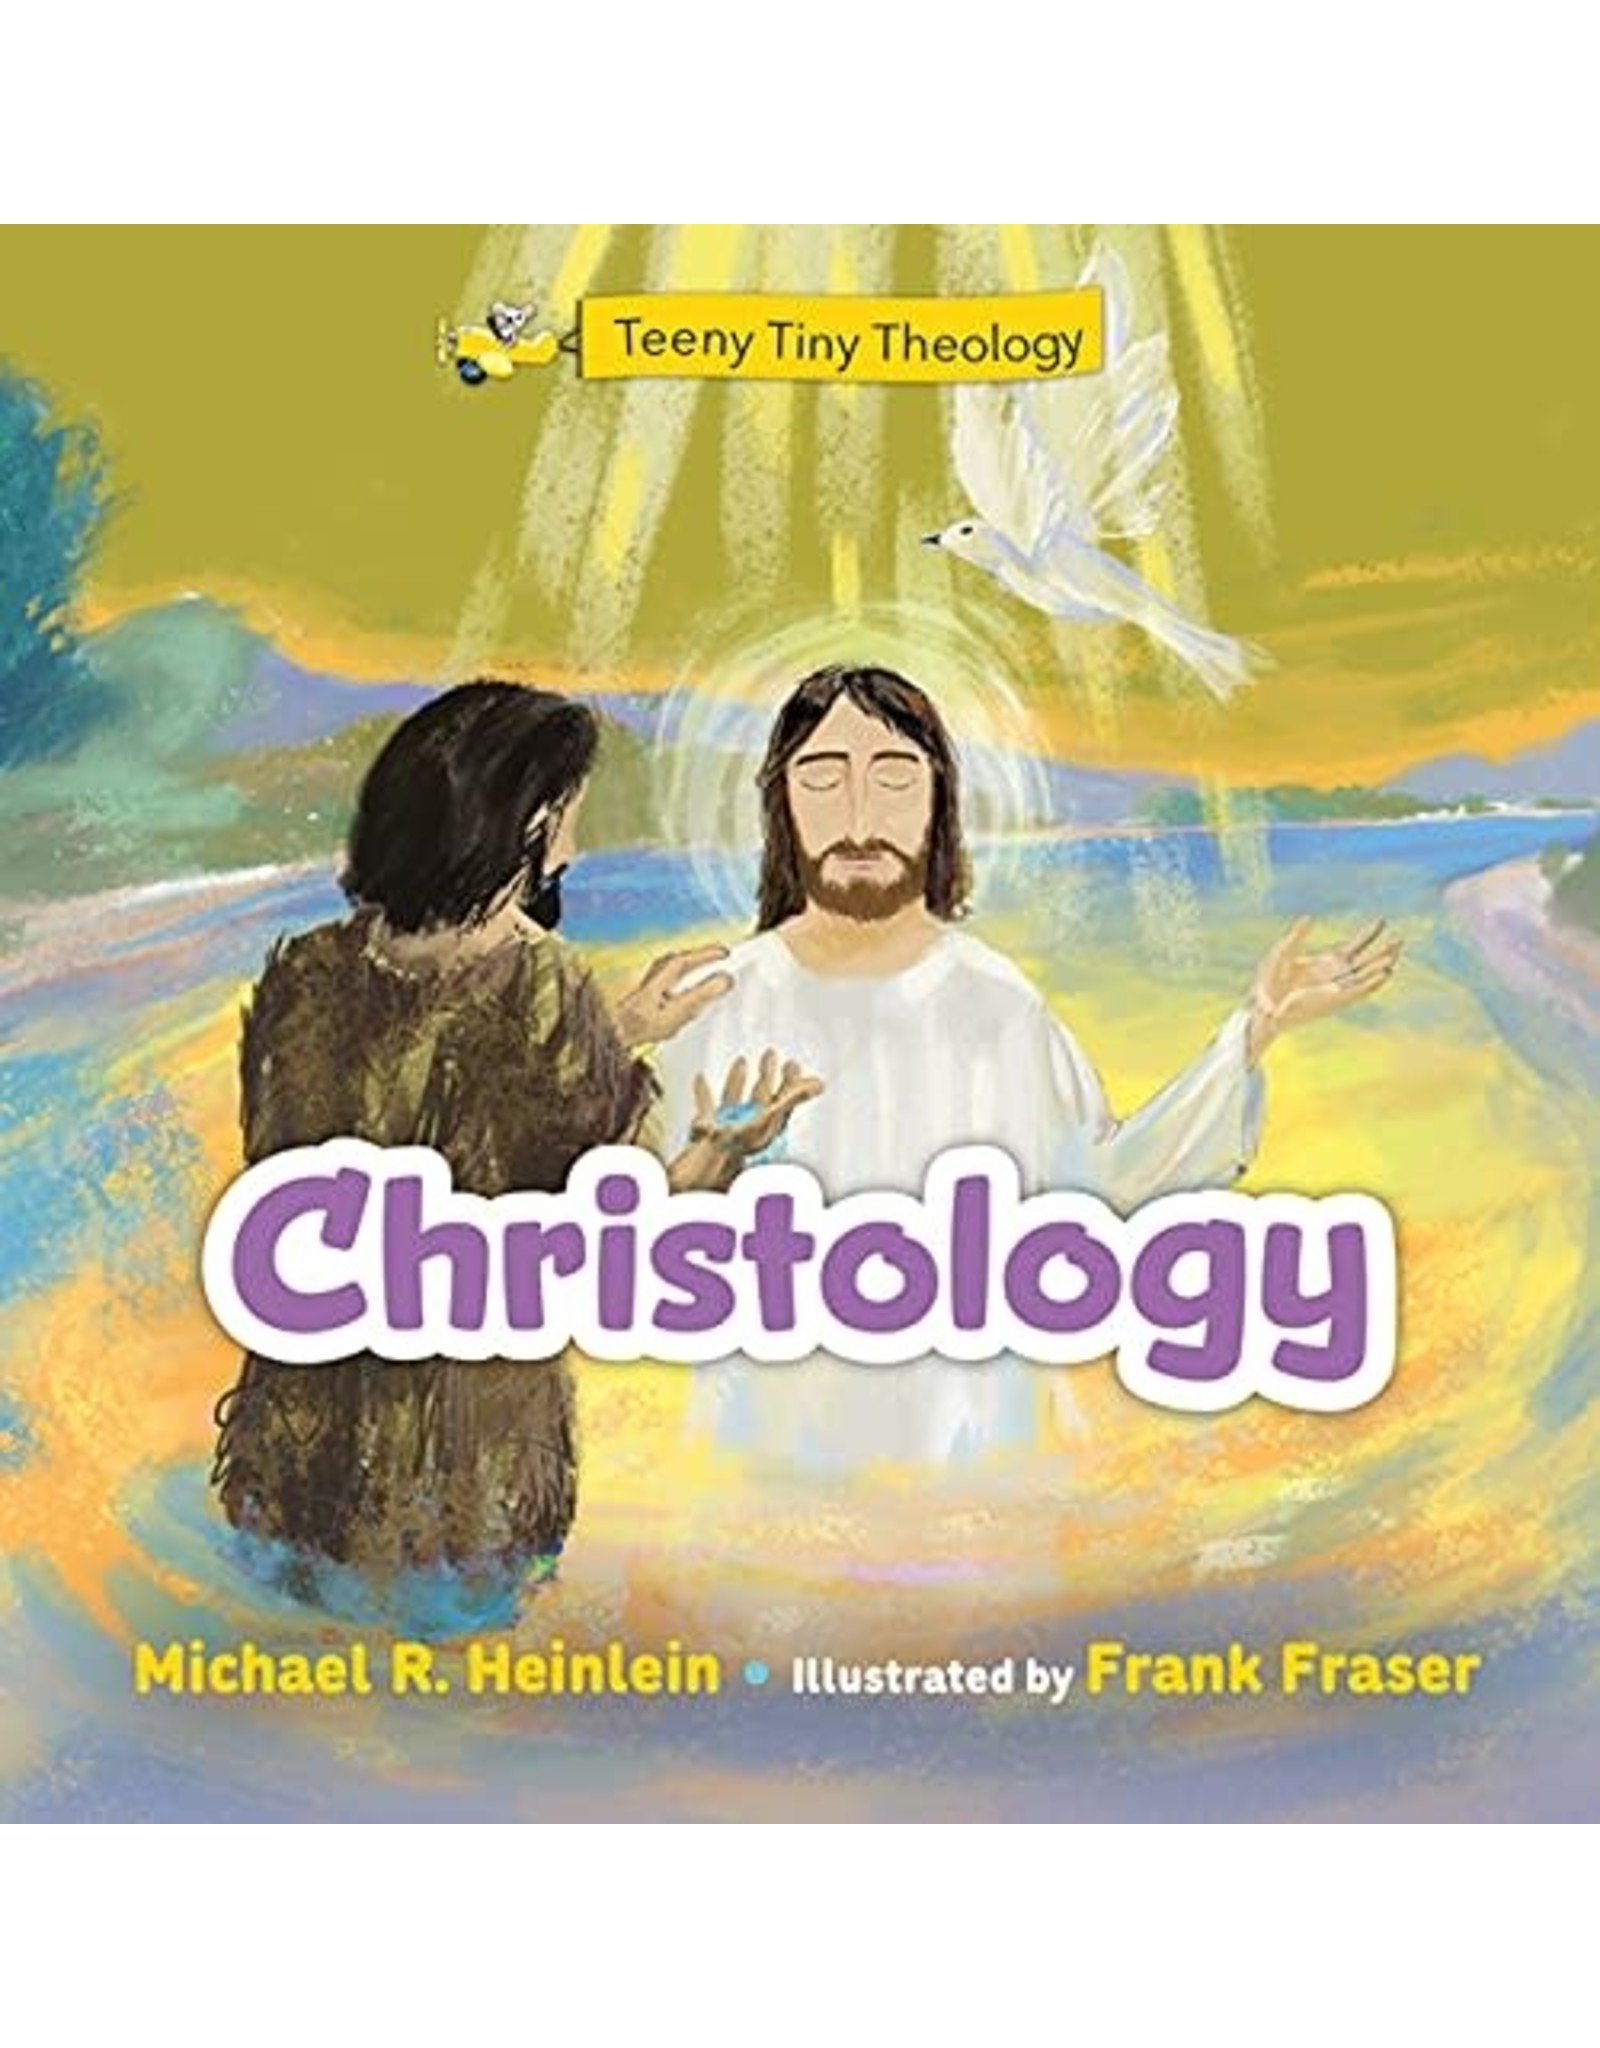 OSV (Our Sunday Visitor) Teeny Tiny Theology: Christology